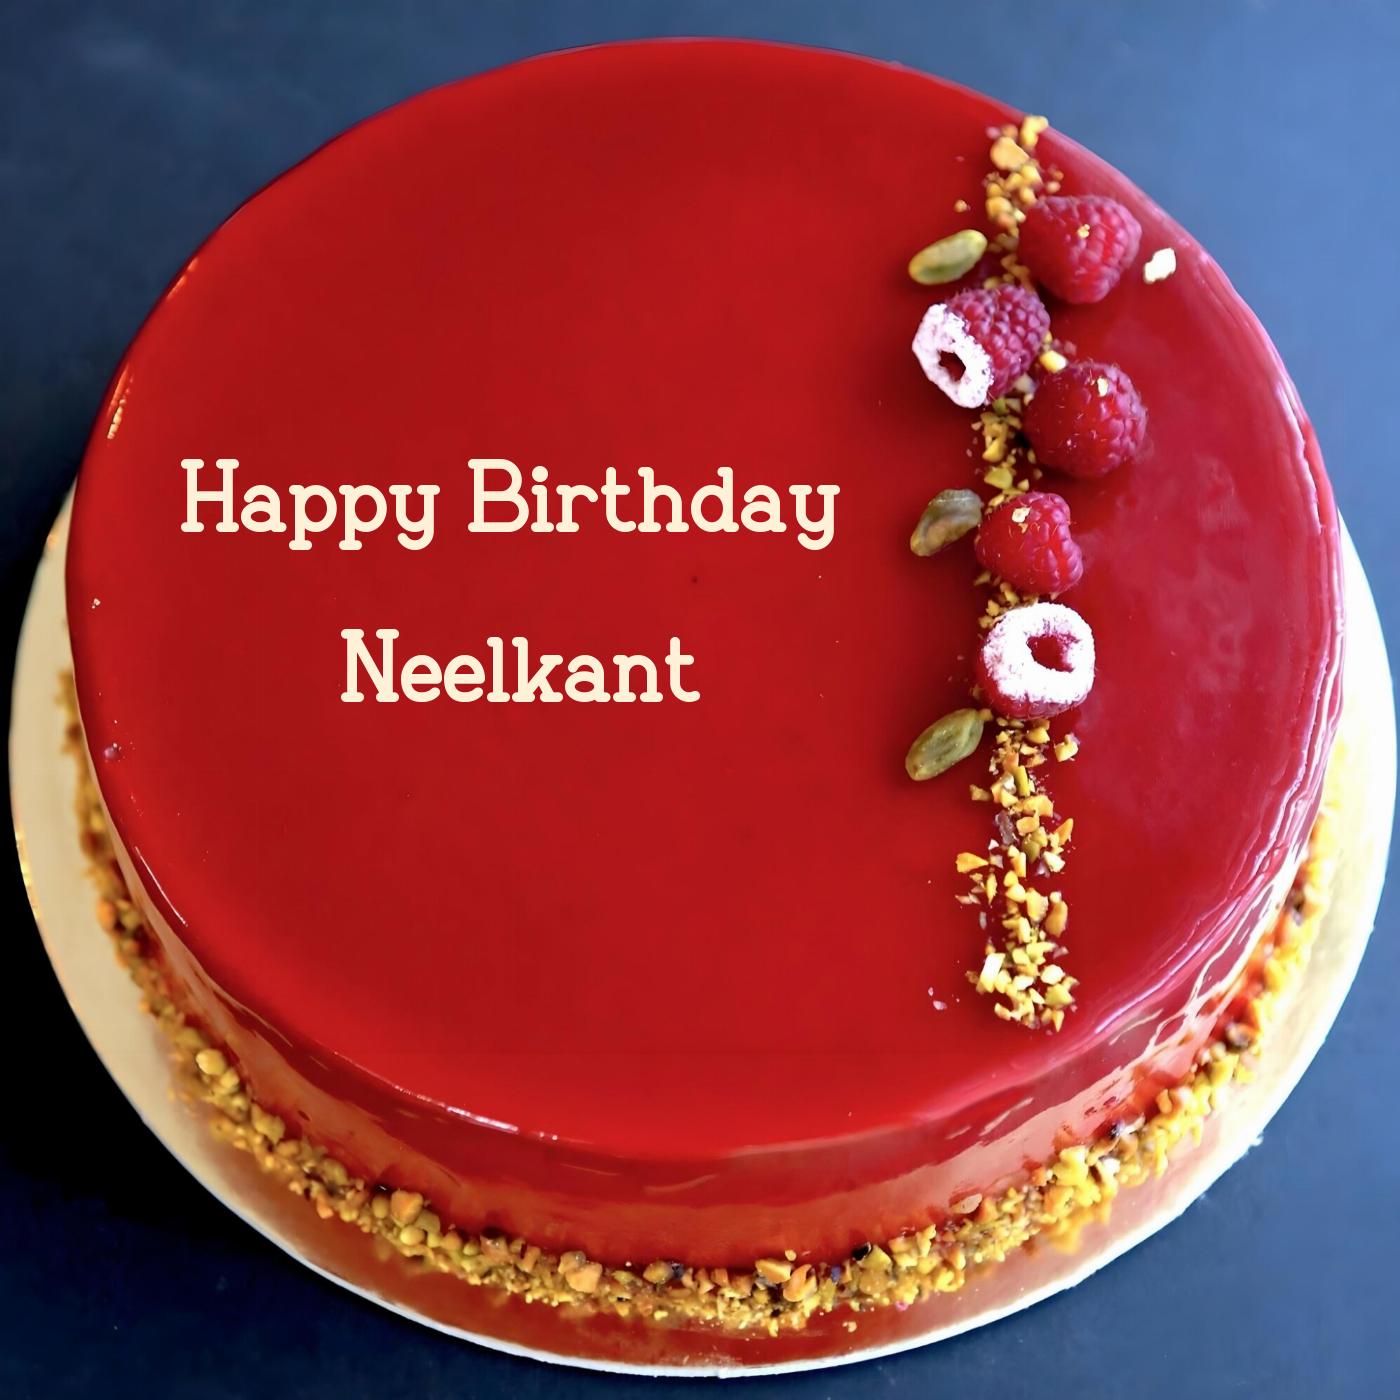 Happy Birthday Neelkant Red Raspberry Cake